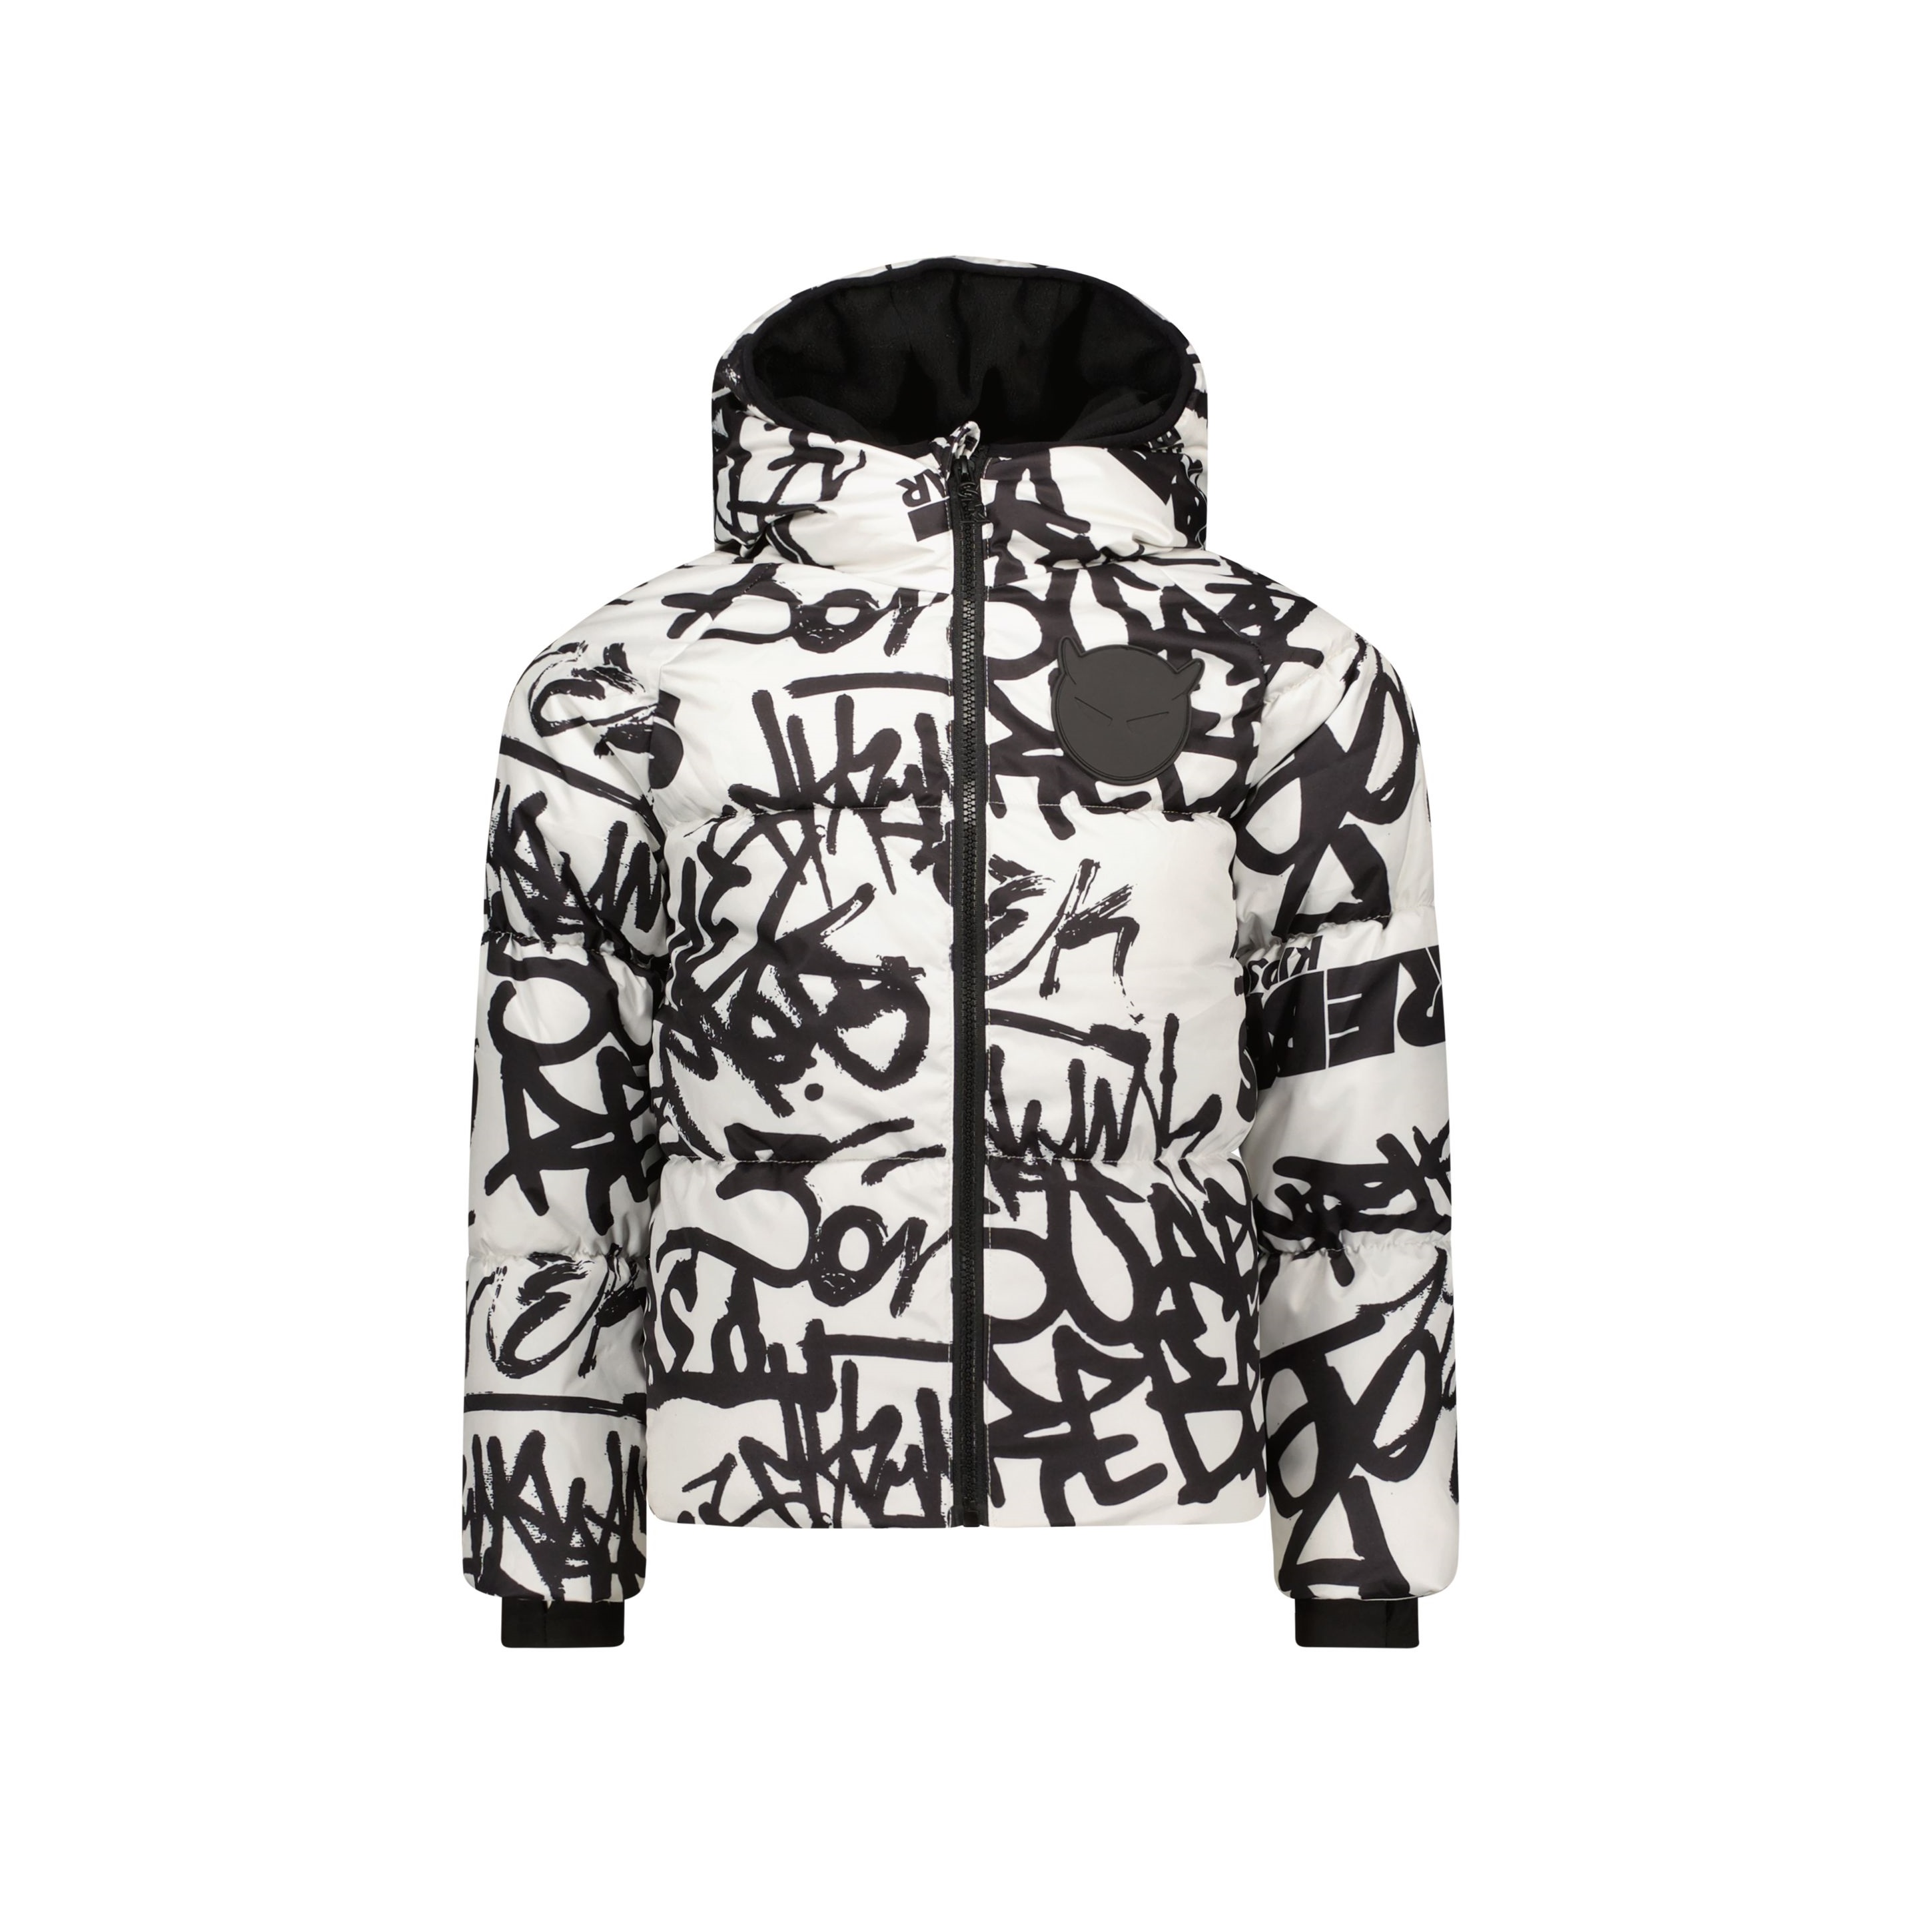 Geci Ski & Snow -  superrebel PUFF Jacket